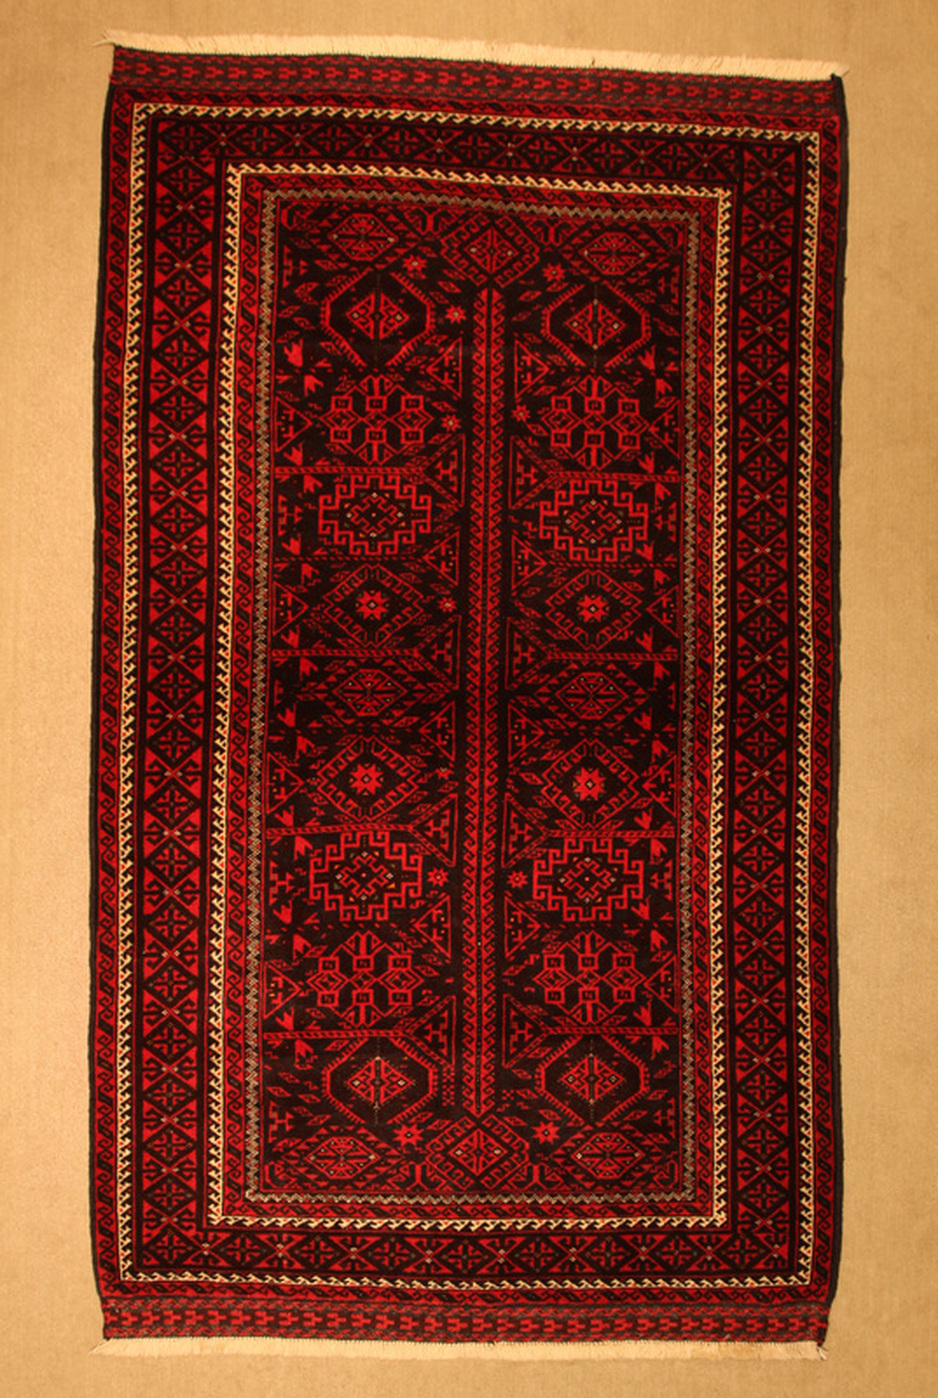 Original Cappadocia Rug